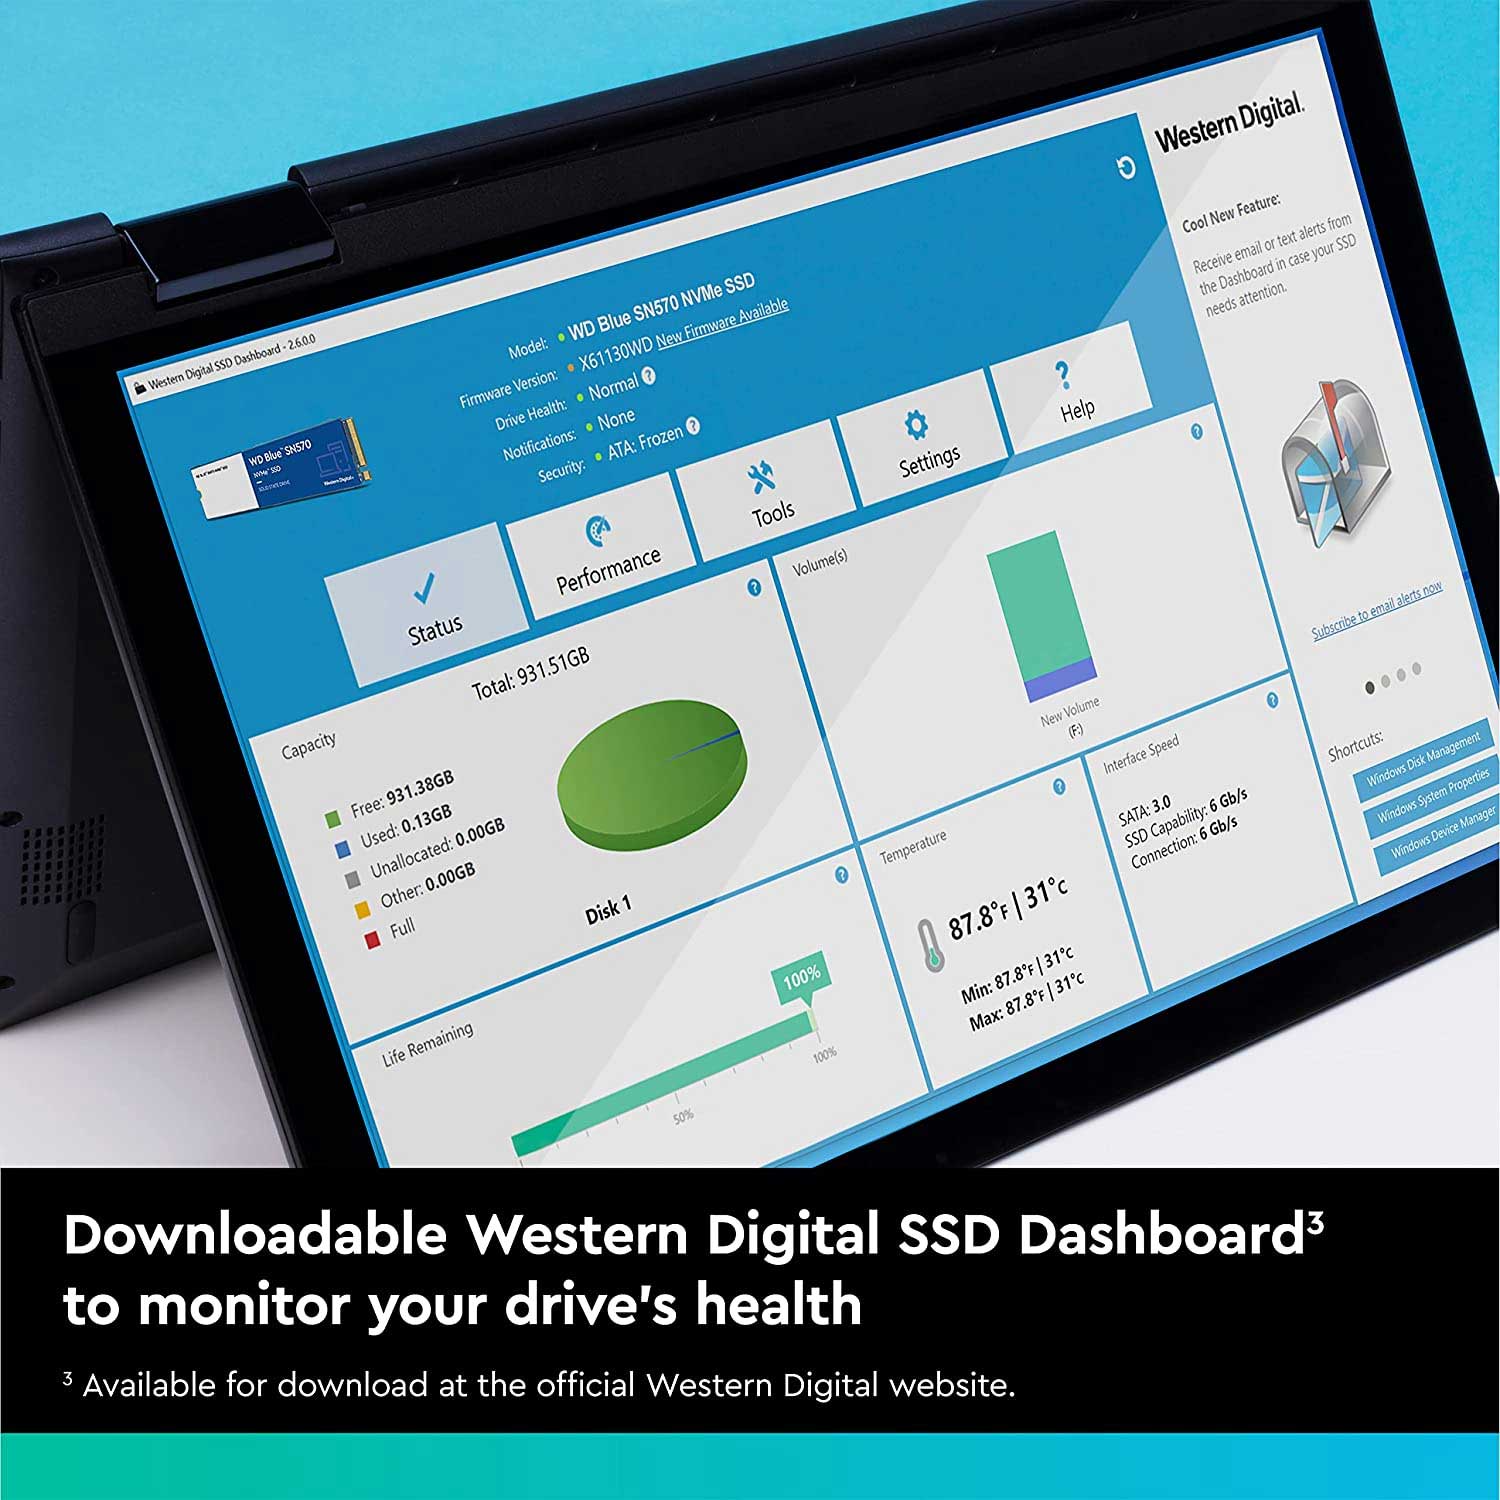 Western Digital 500GB Blue SN570 NVMe M.2 2280 Internal Solid State Drive - WDS500G3B0C